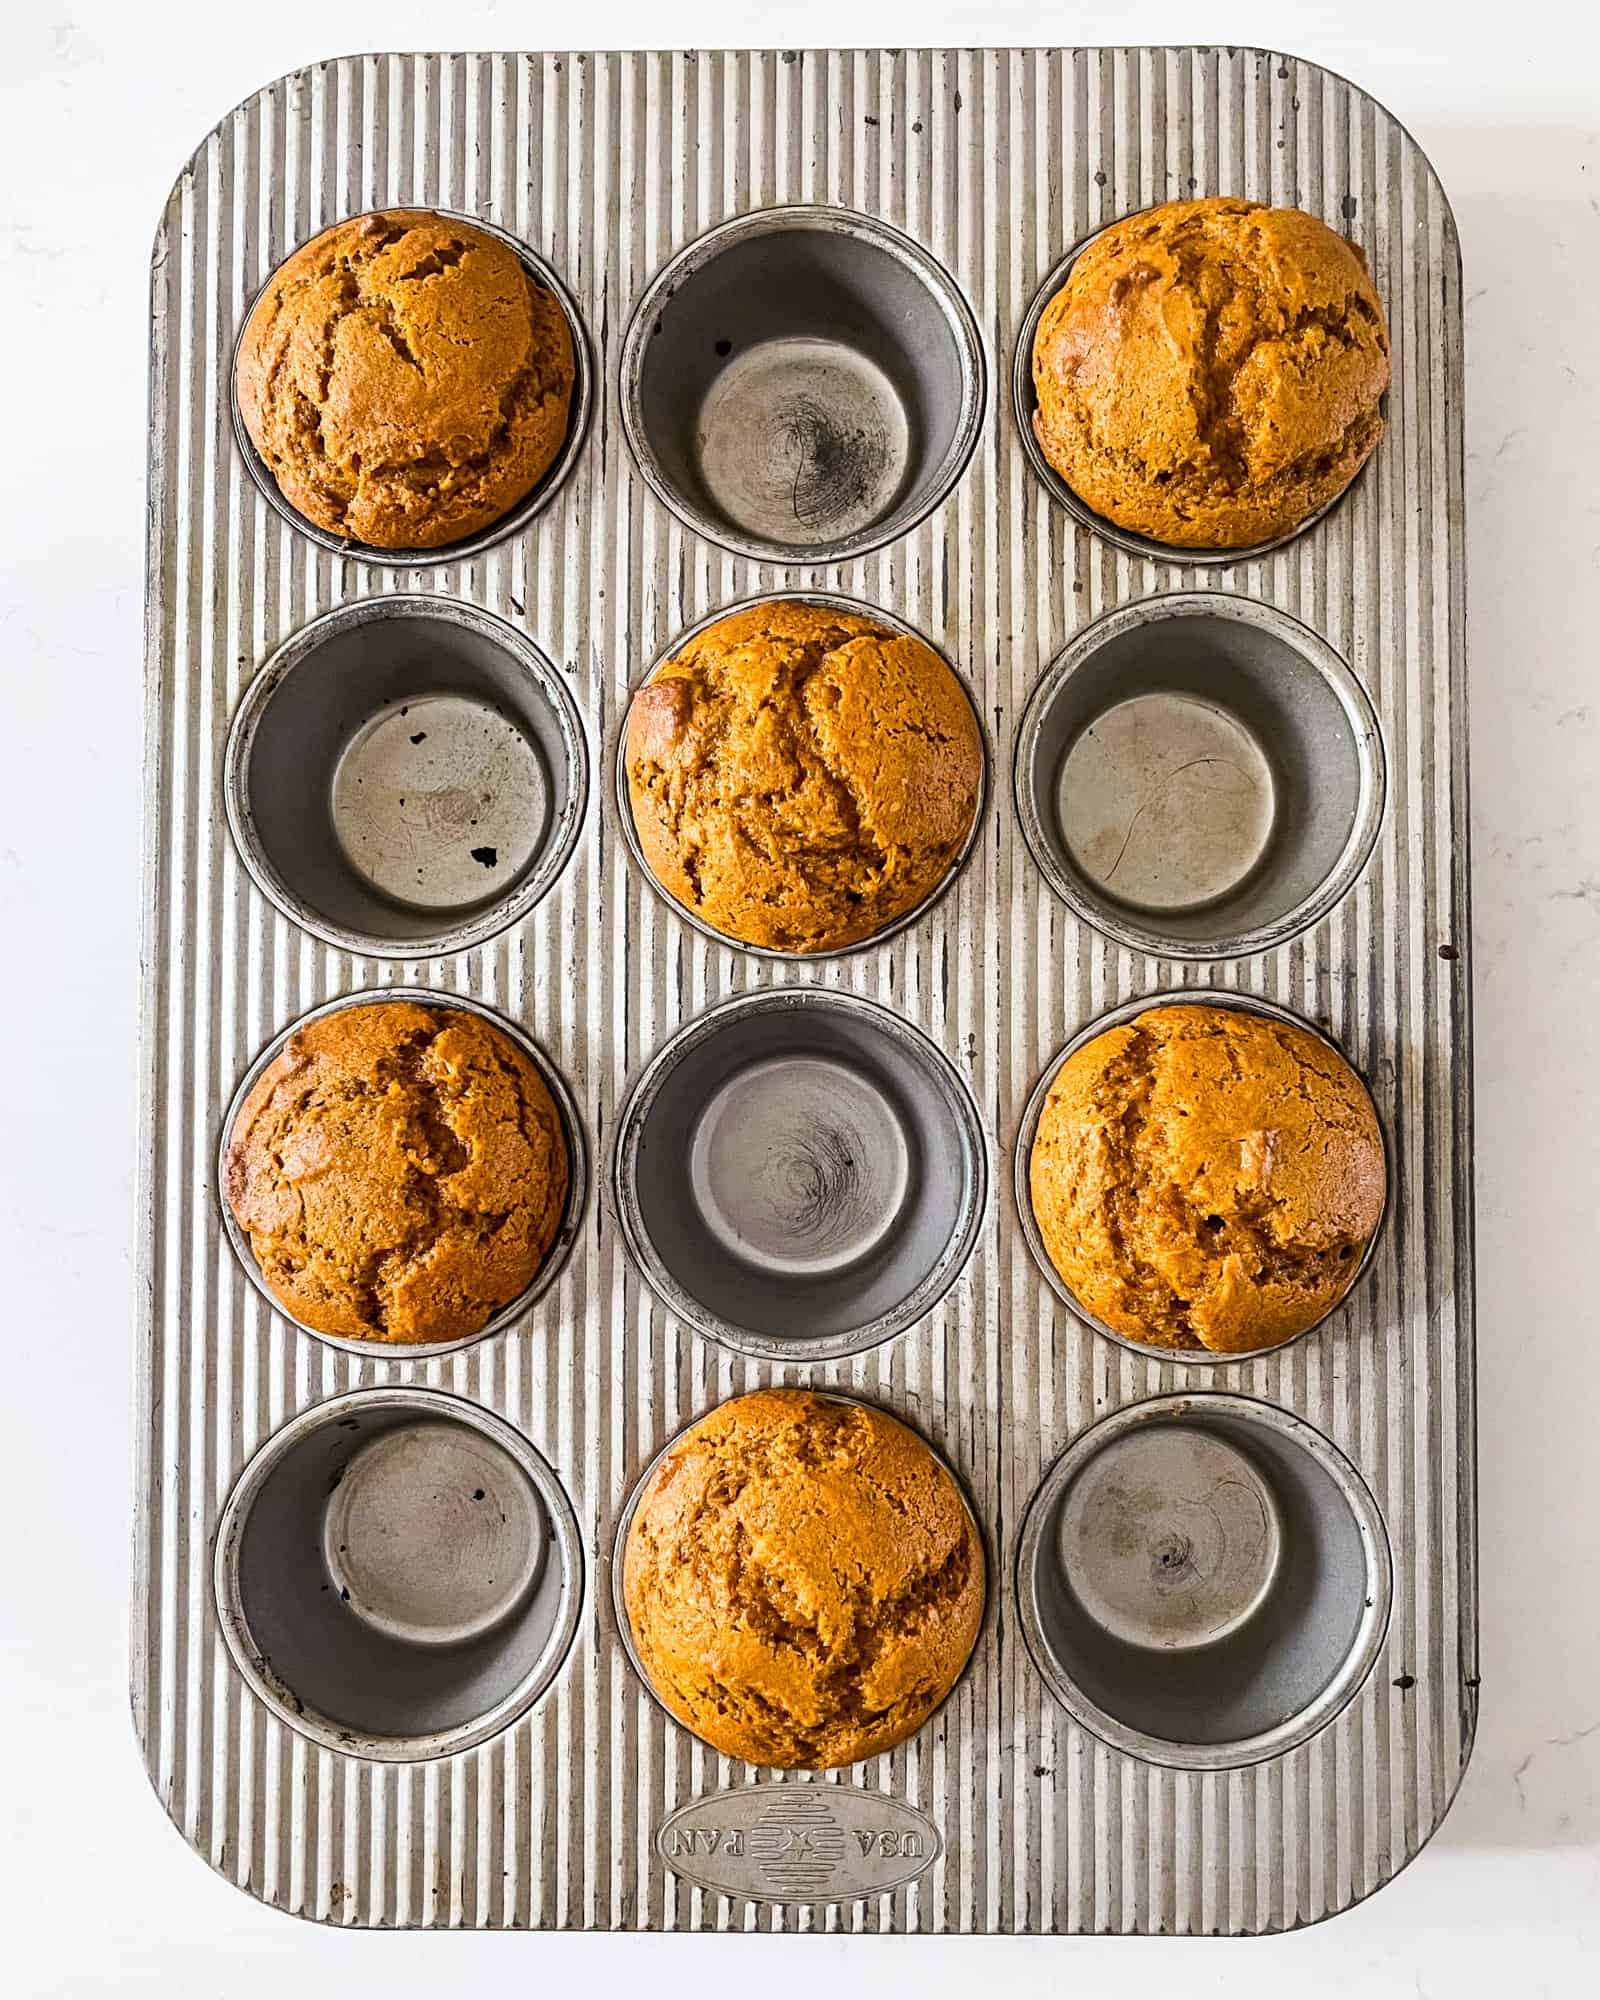 pumpkin muffins baked in a muffin pan